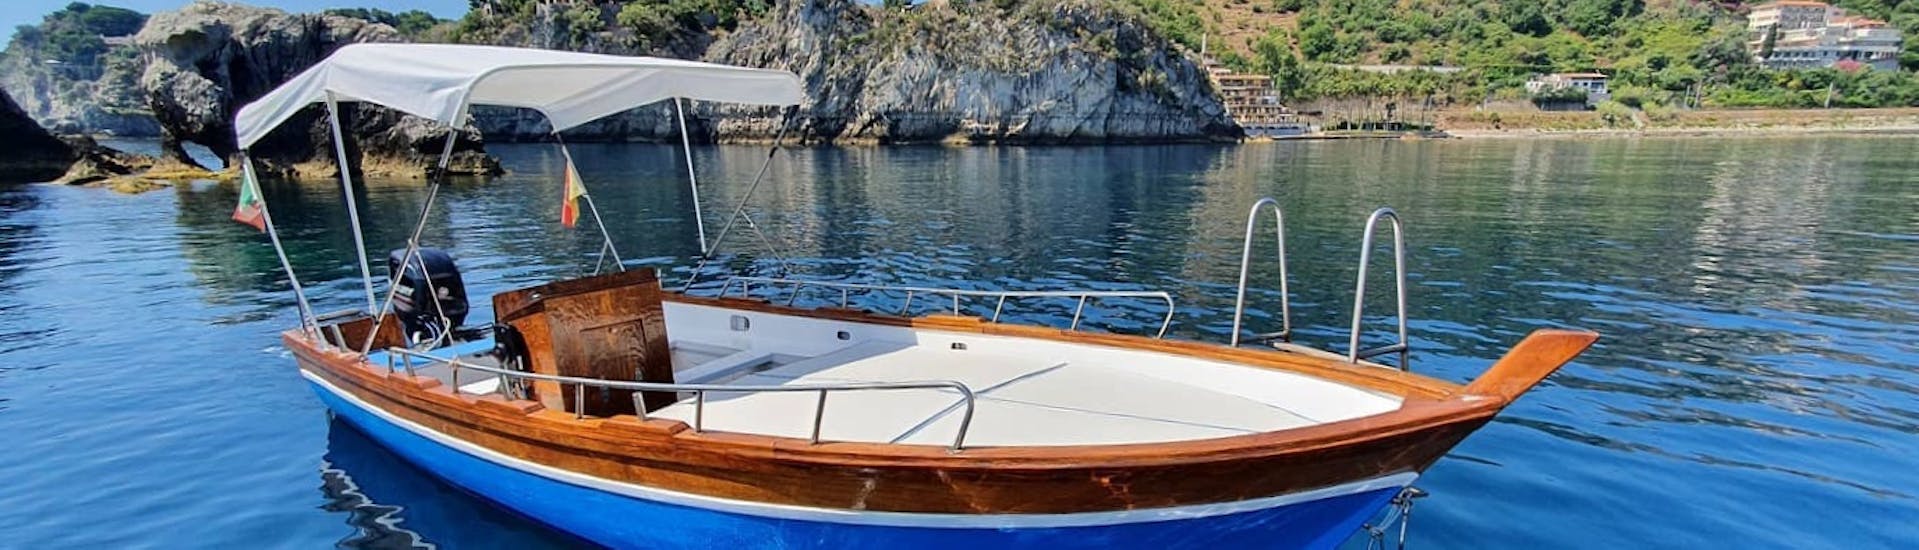 Photo du bateau de la balade au coucher du soleil de Taormina avec apéritif avec Boat Experience Taormina.